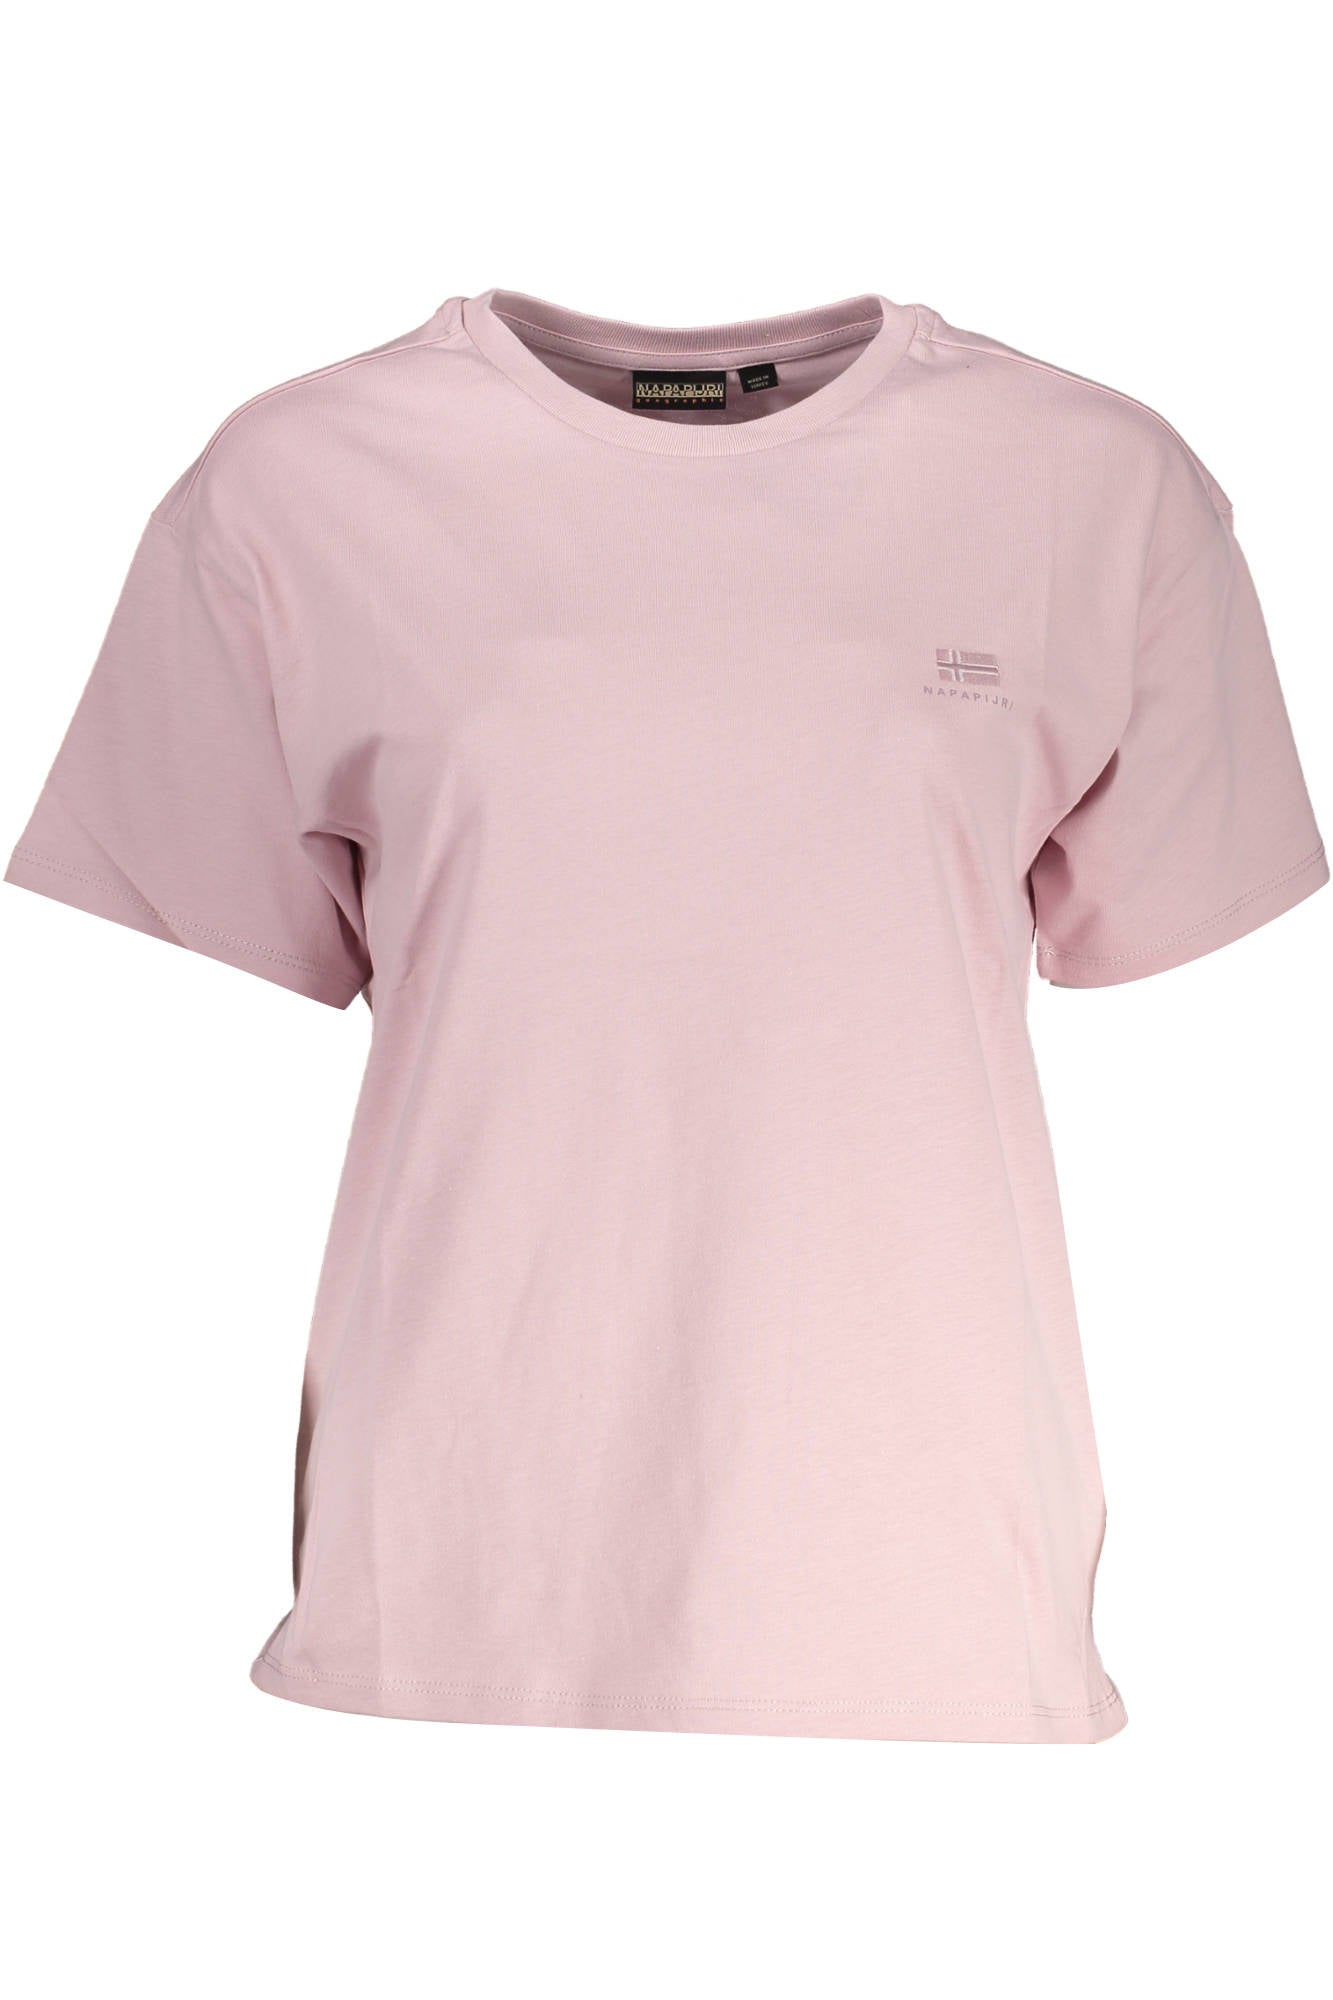 Napapijri Pink Cotton Tops & T-Shirt - Fizigo